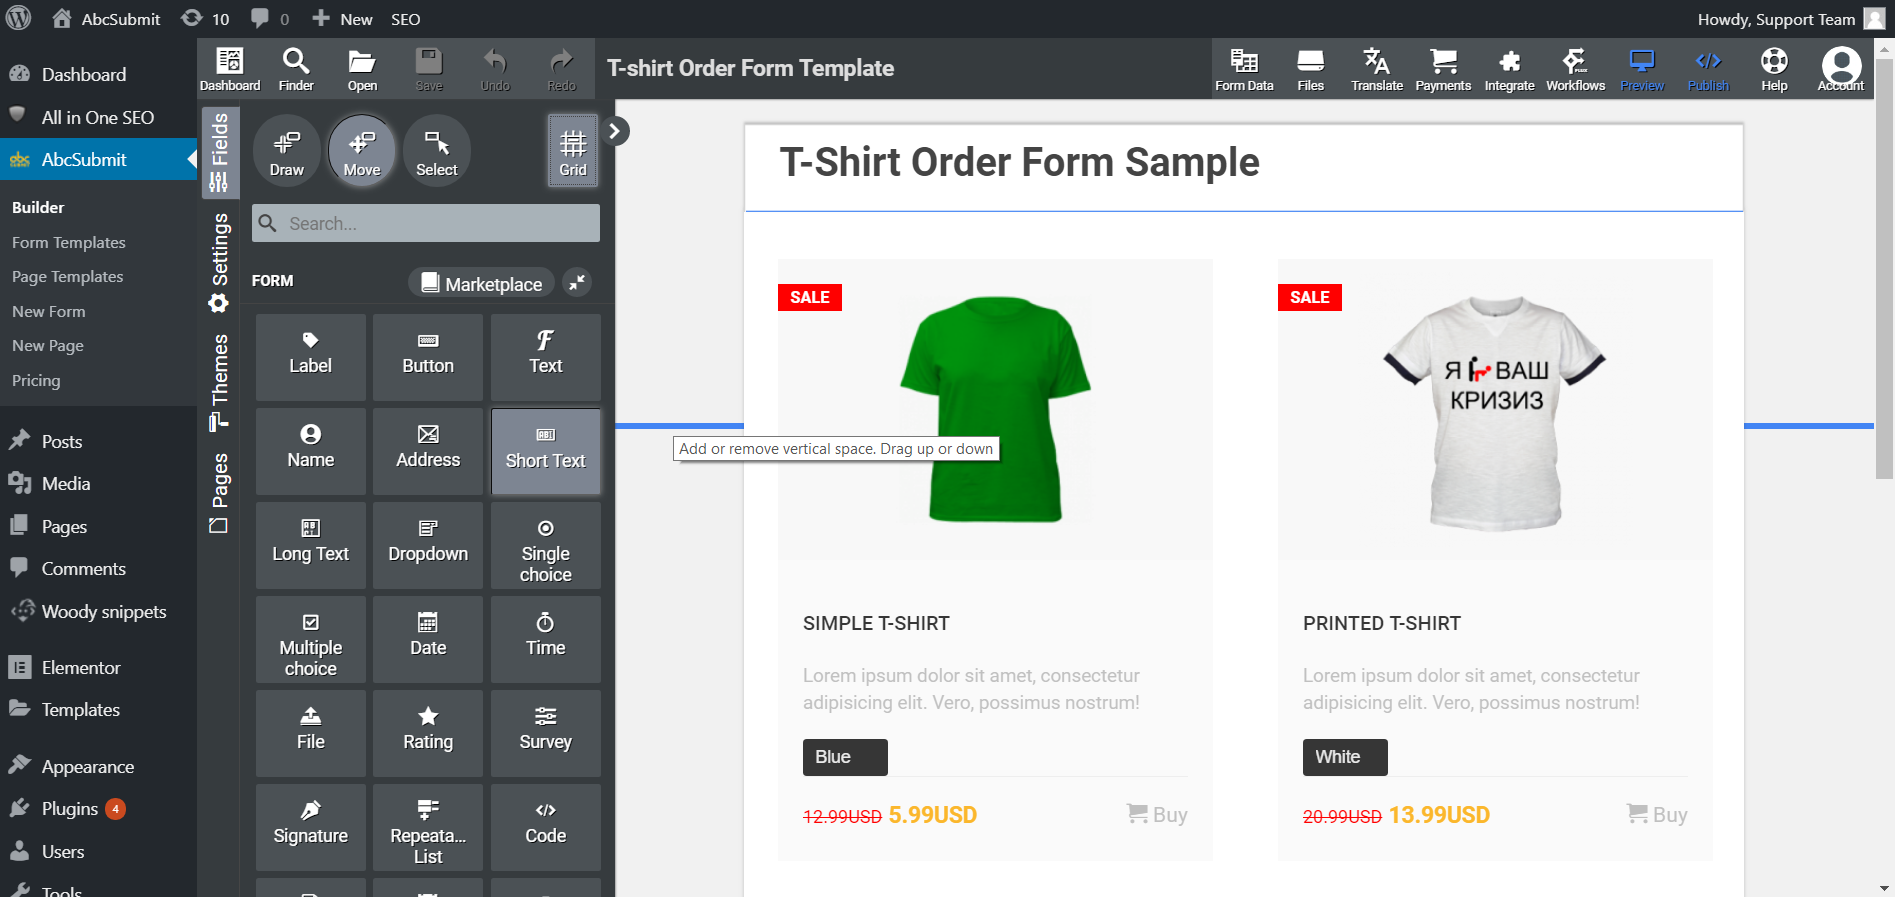 Editing T-Shirt Order Form